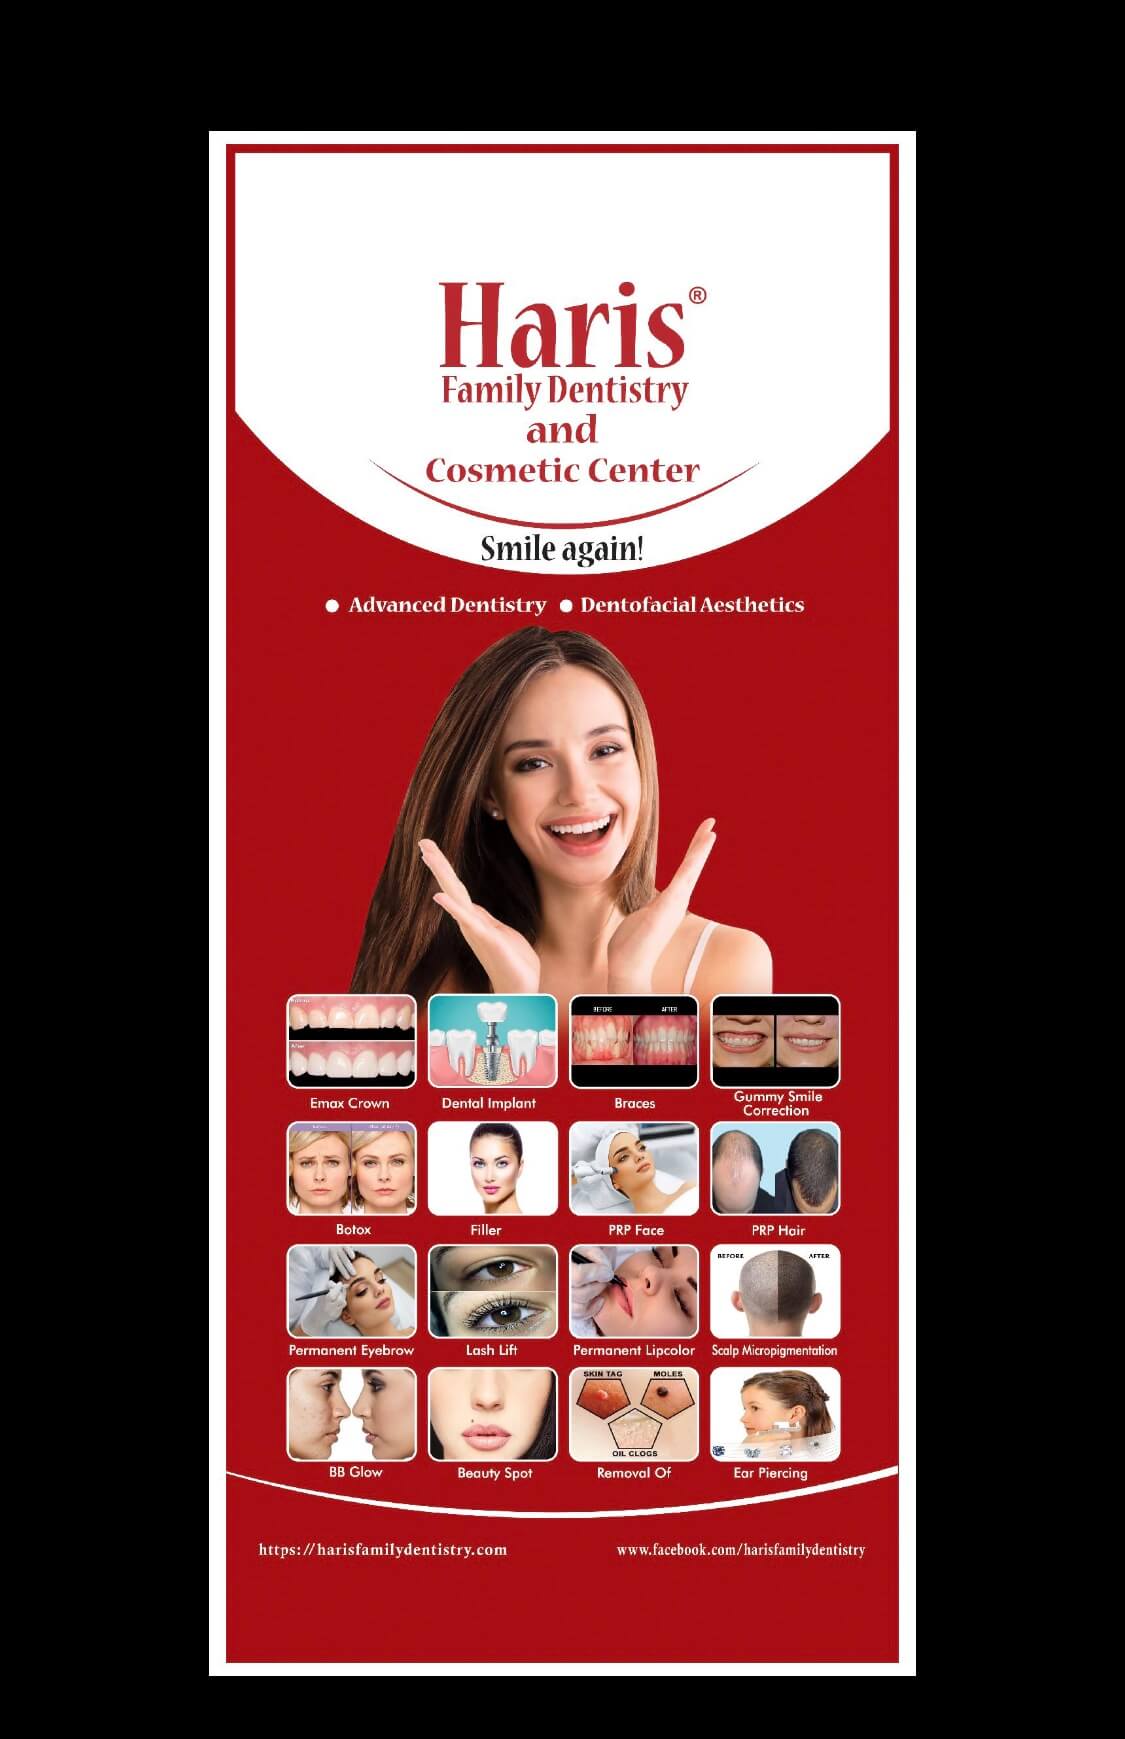 Haris Family Dentistry flyers